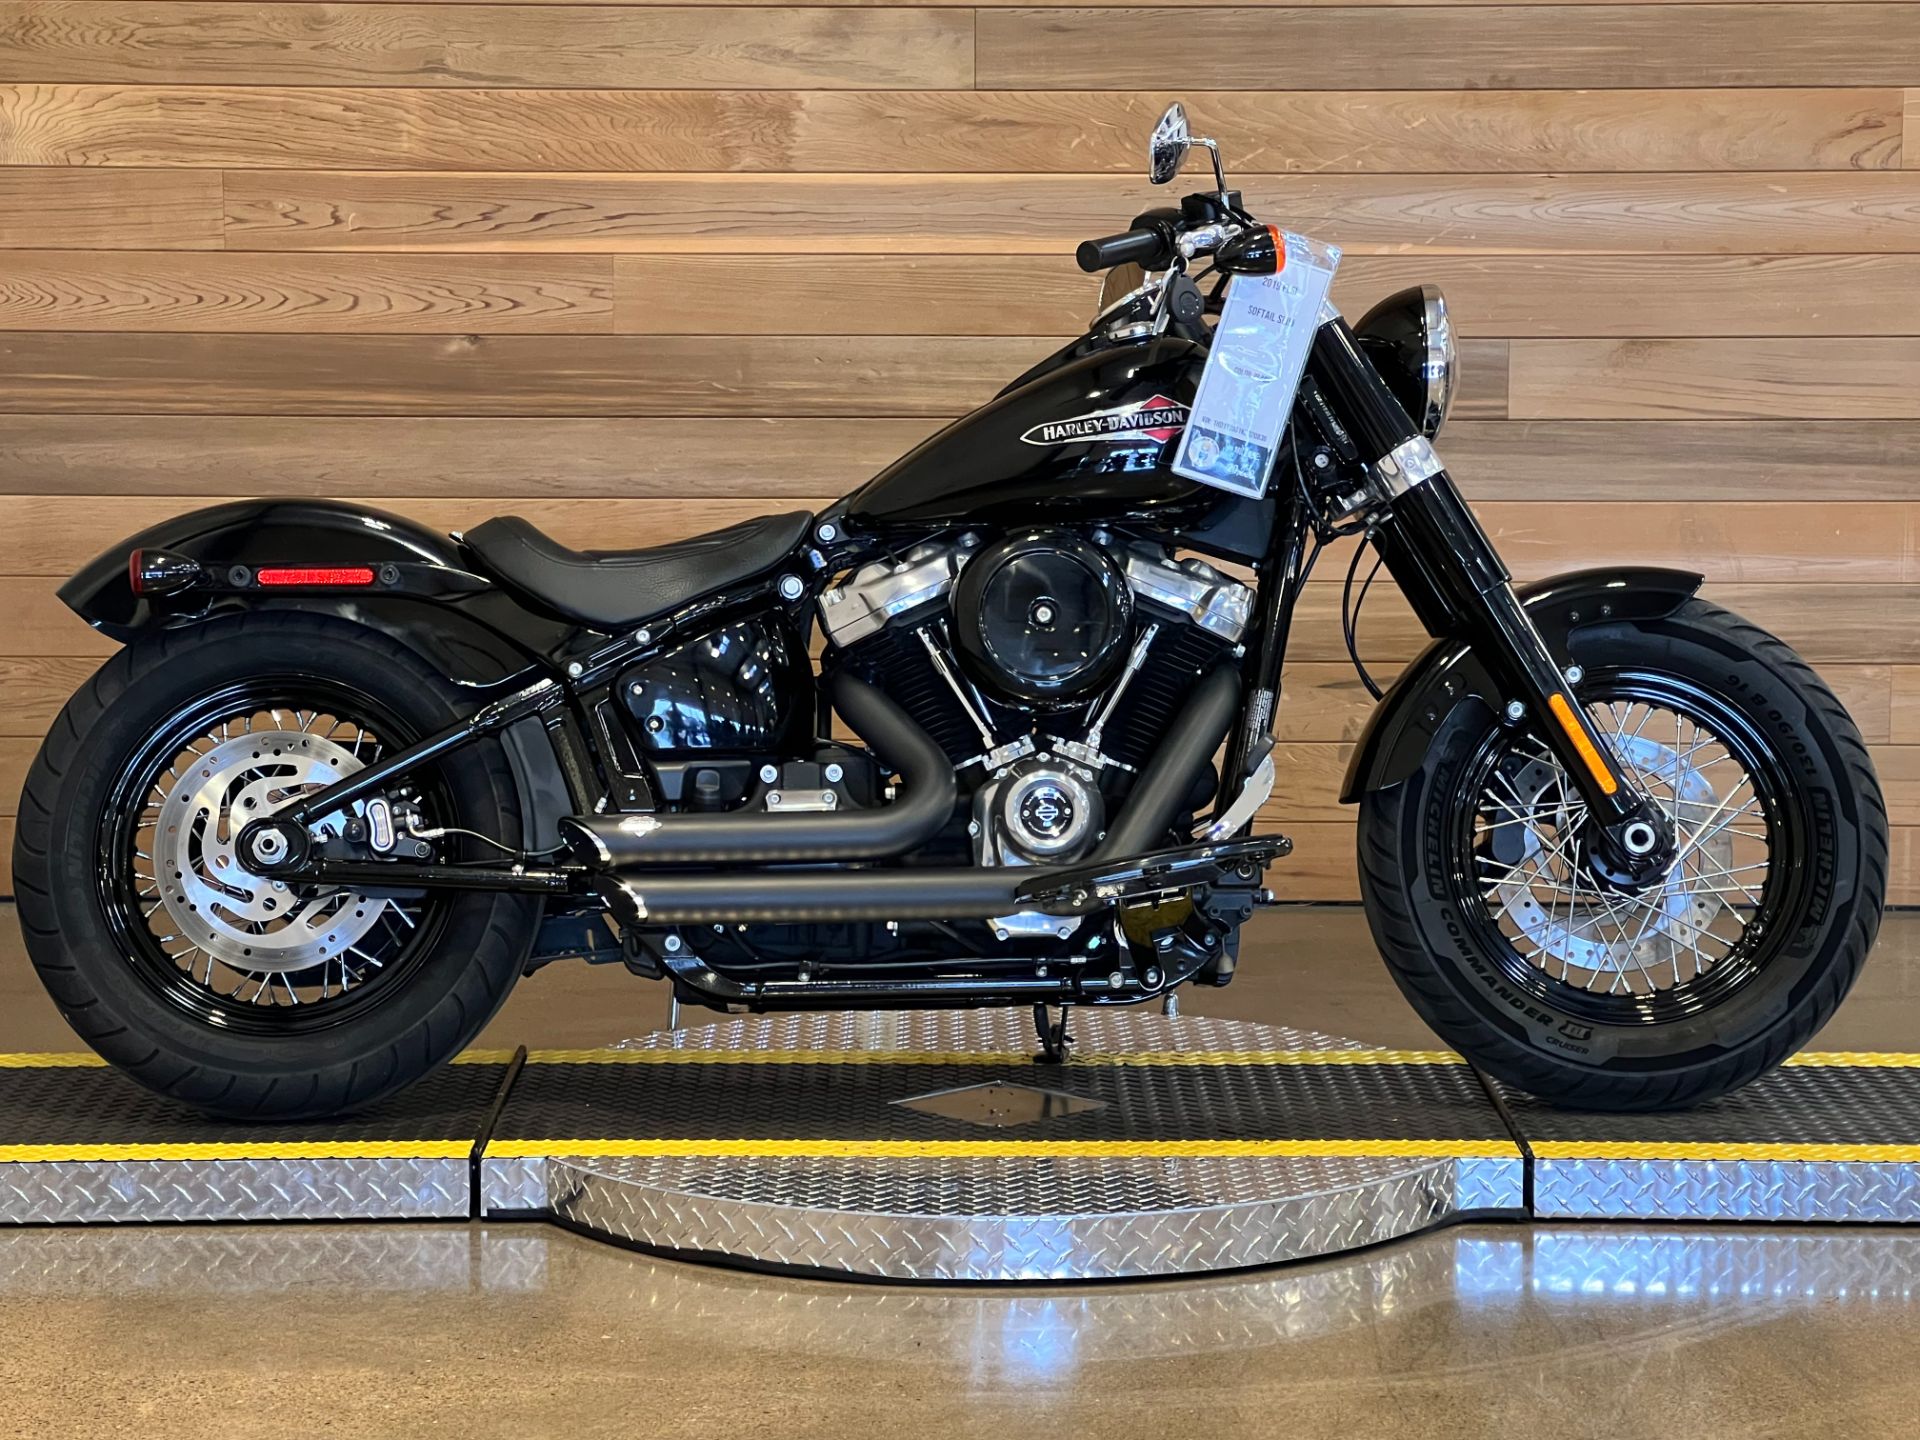 2019 Harley-Davidson Softail Slim® in Salem, Oregon - Photo 1